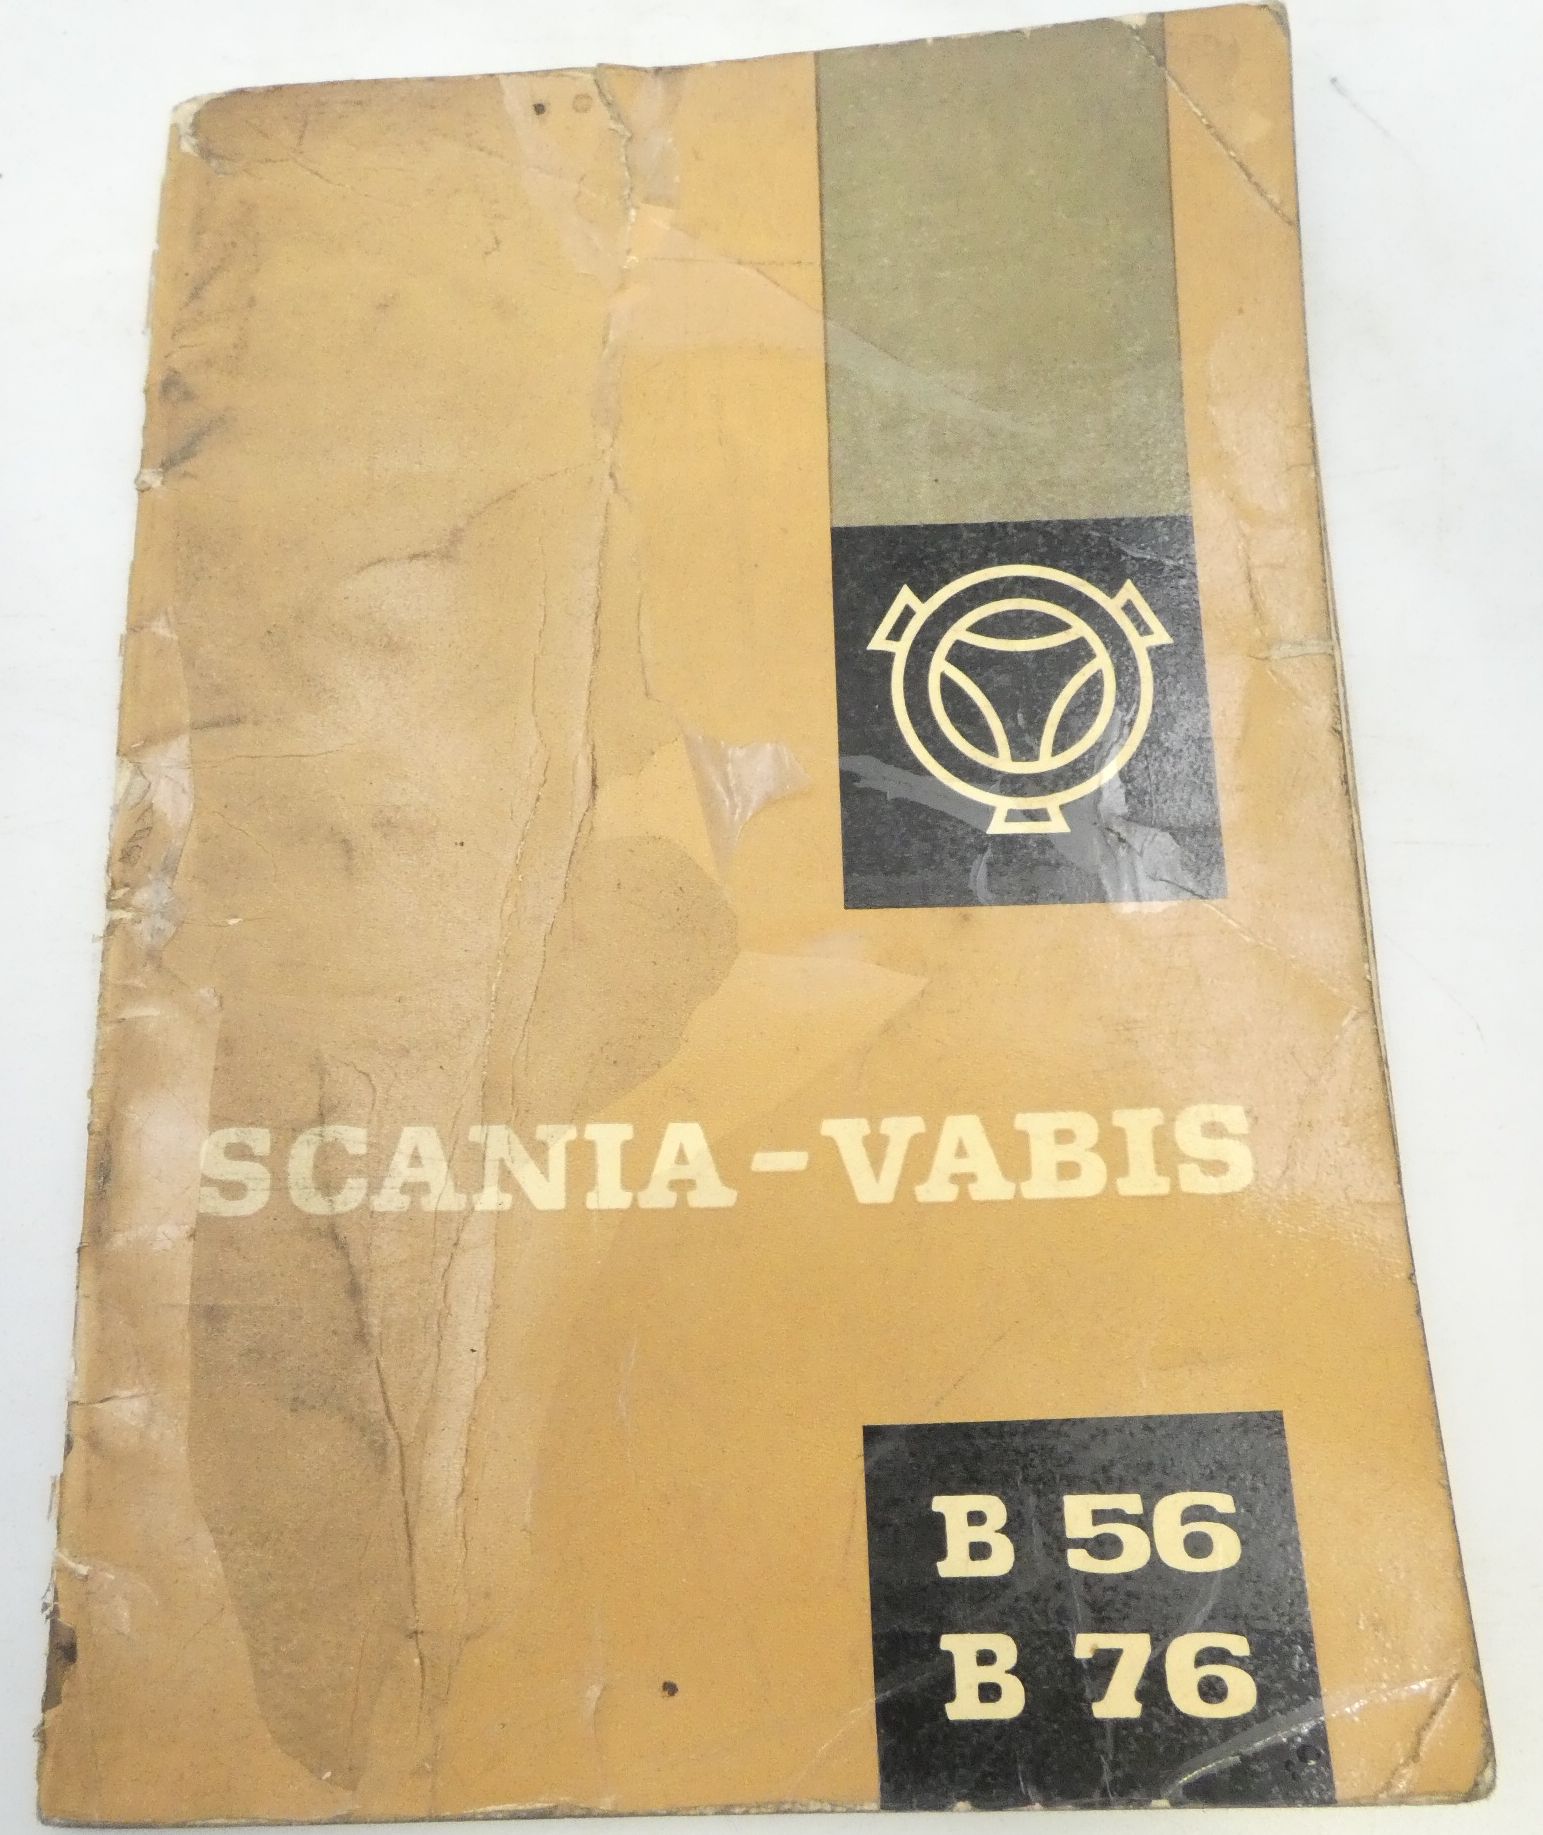 Scania-Vabis B56, B76 ohjekirja